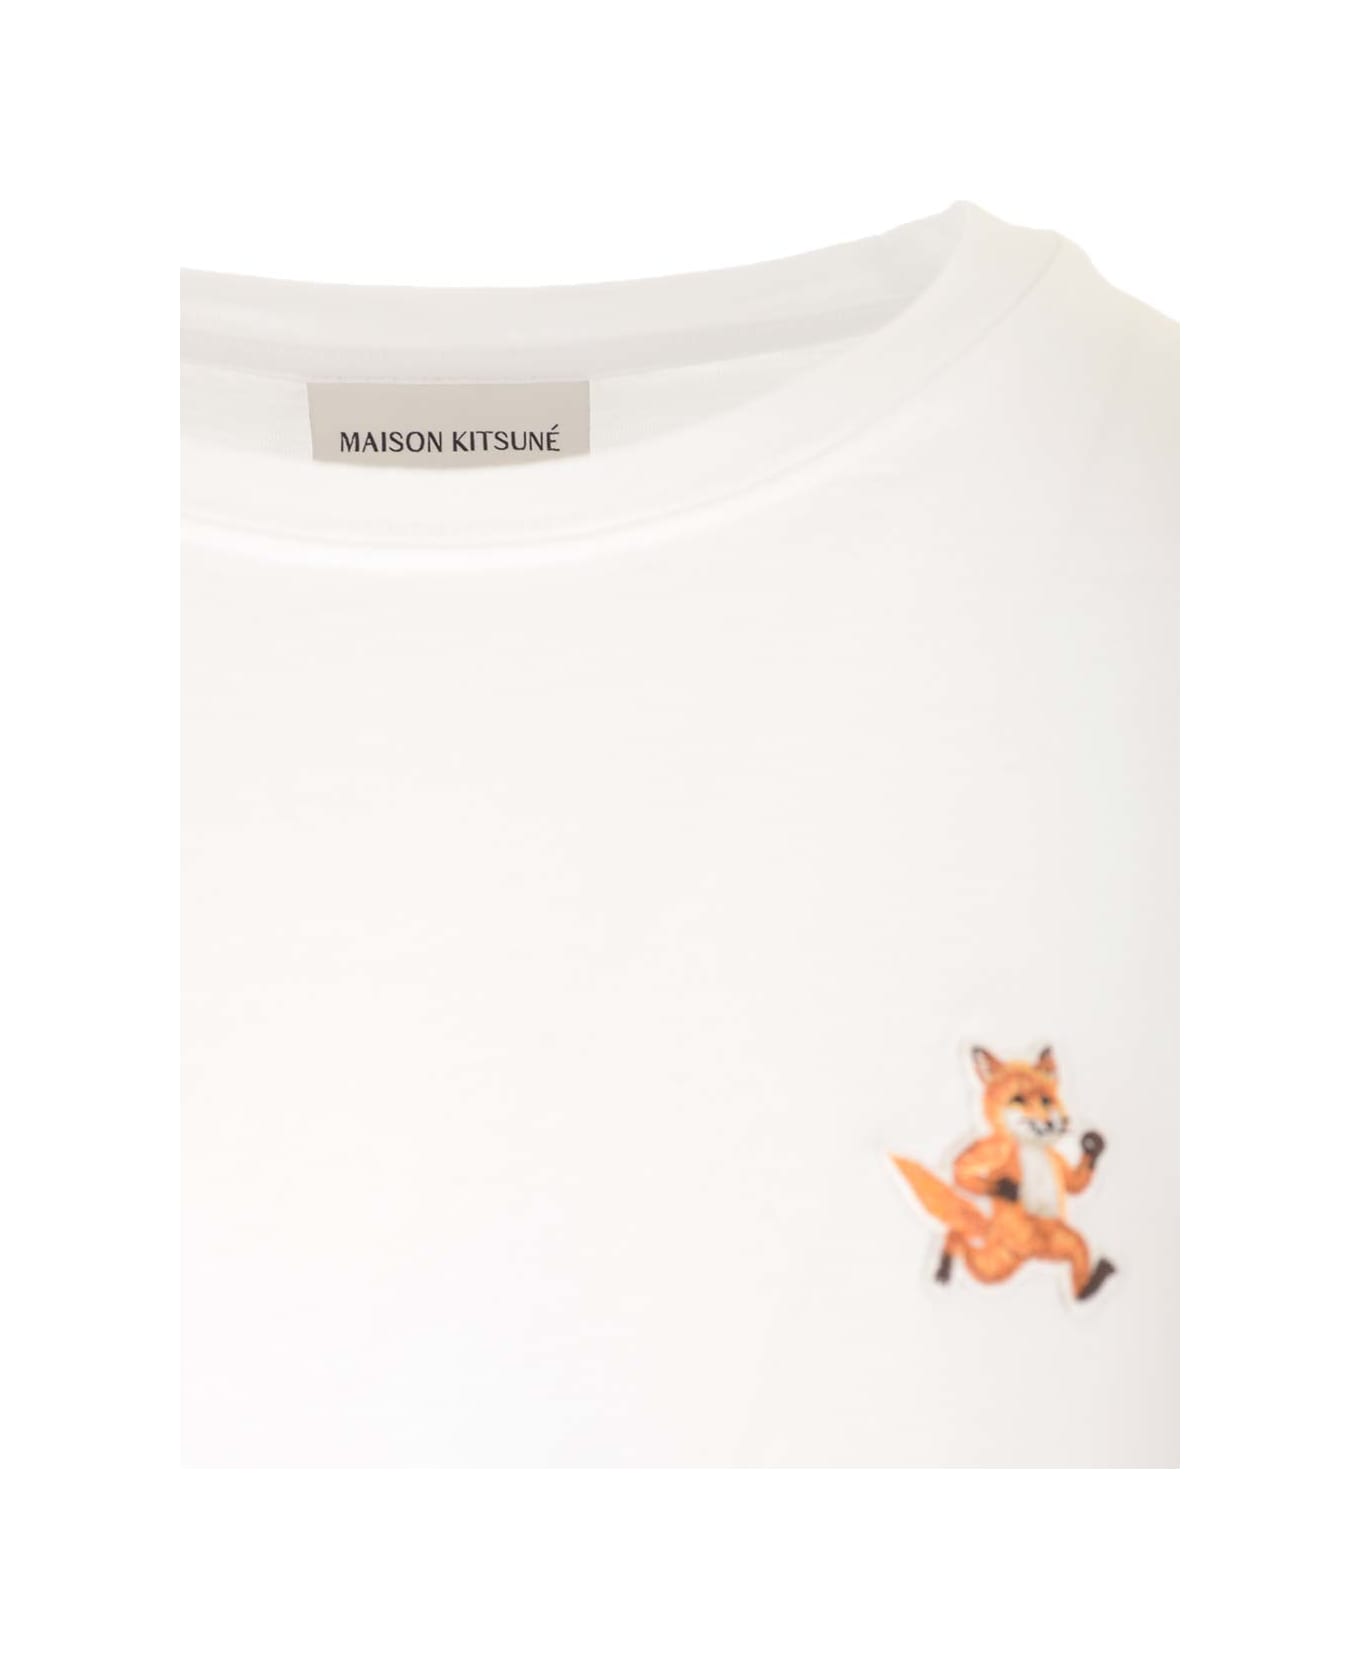 Maison Kitsuné White T-shirt With Speedy Fox Patch - White